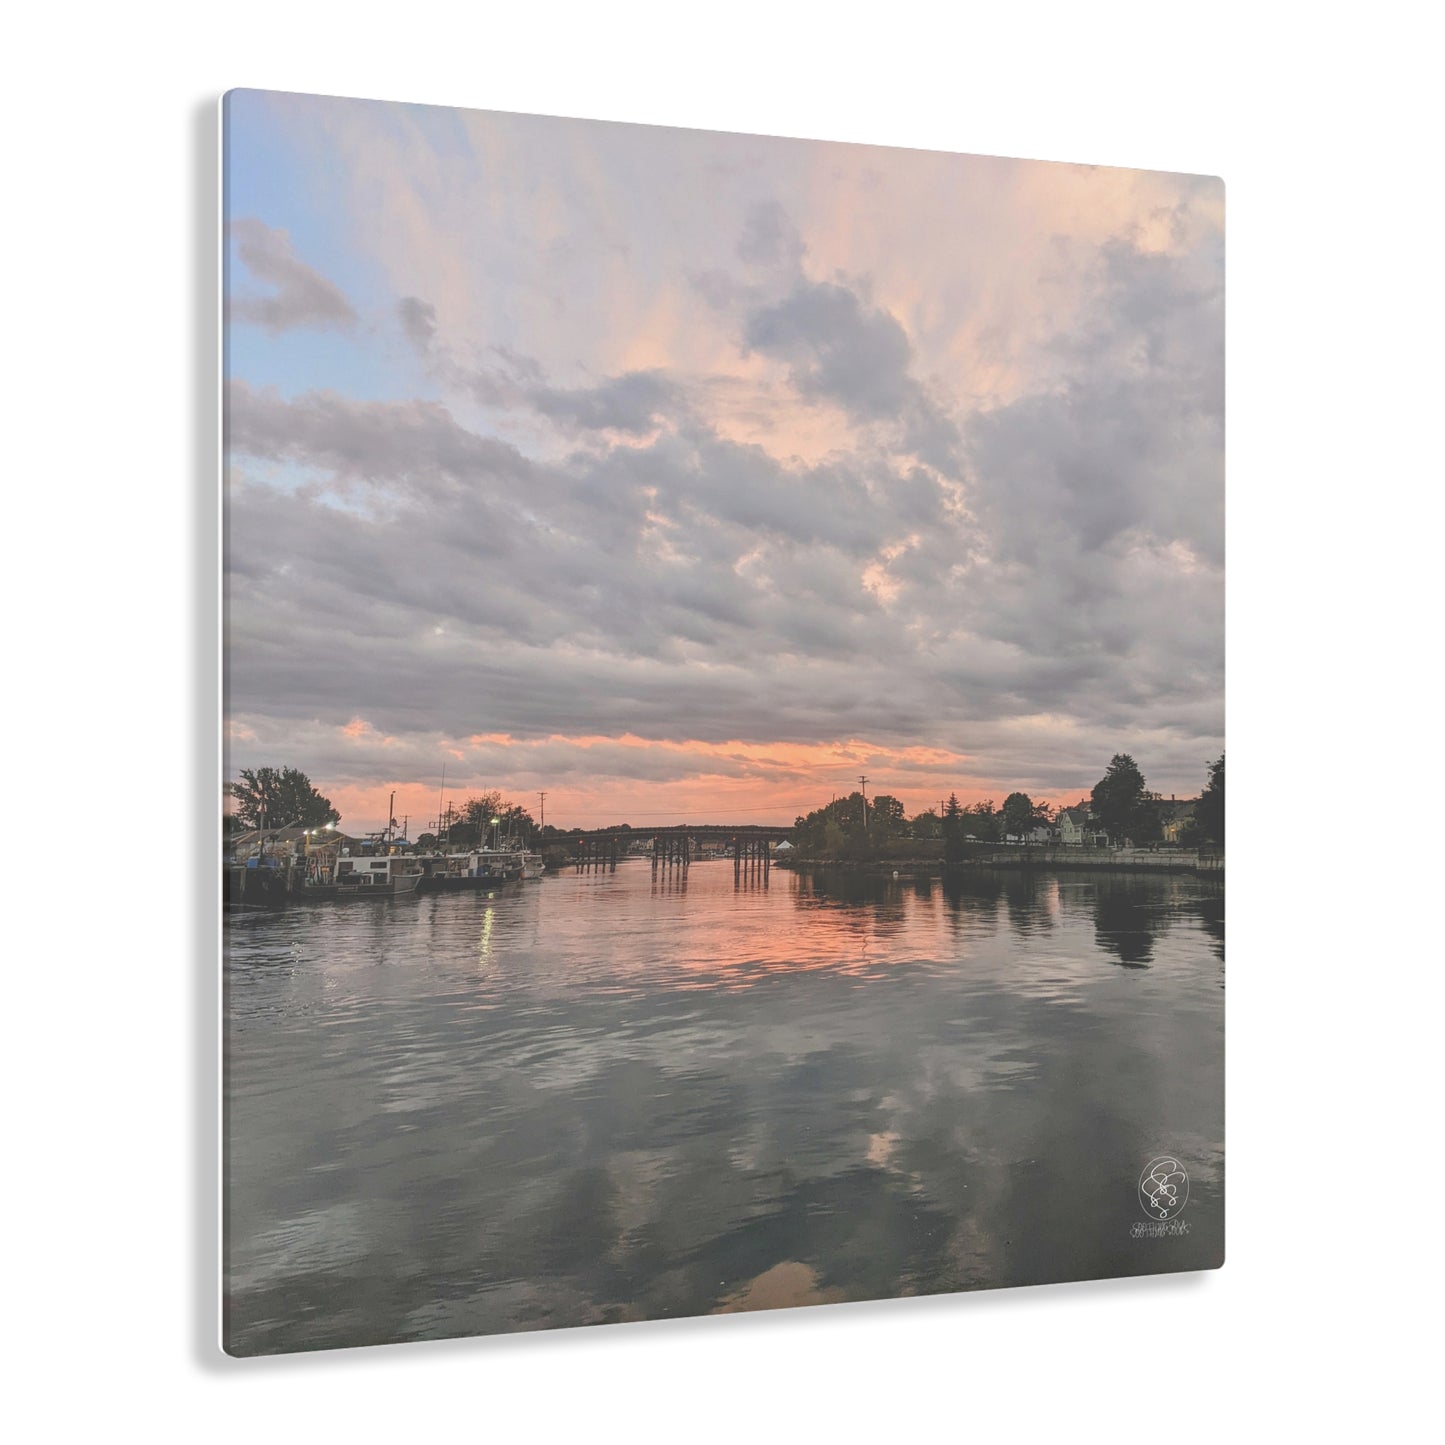 SSSS Crystal River at Sunset Acrylic Print